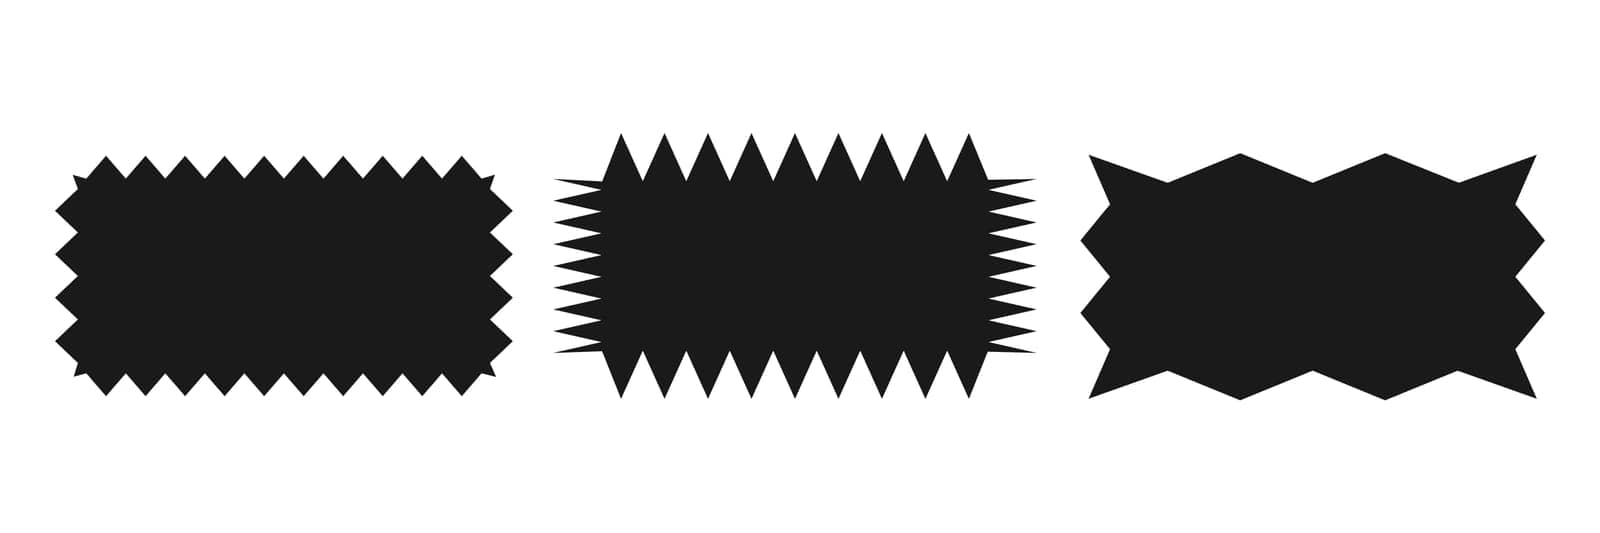 A set of uneven zigzag rectangular shapes. by Mallva